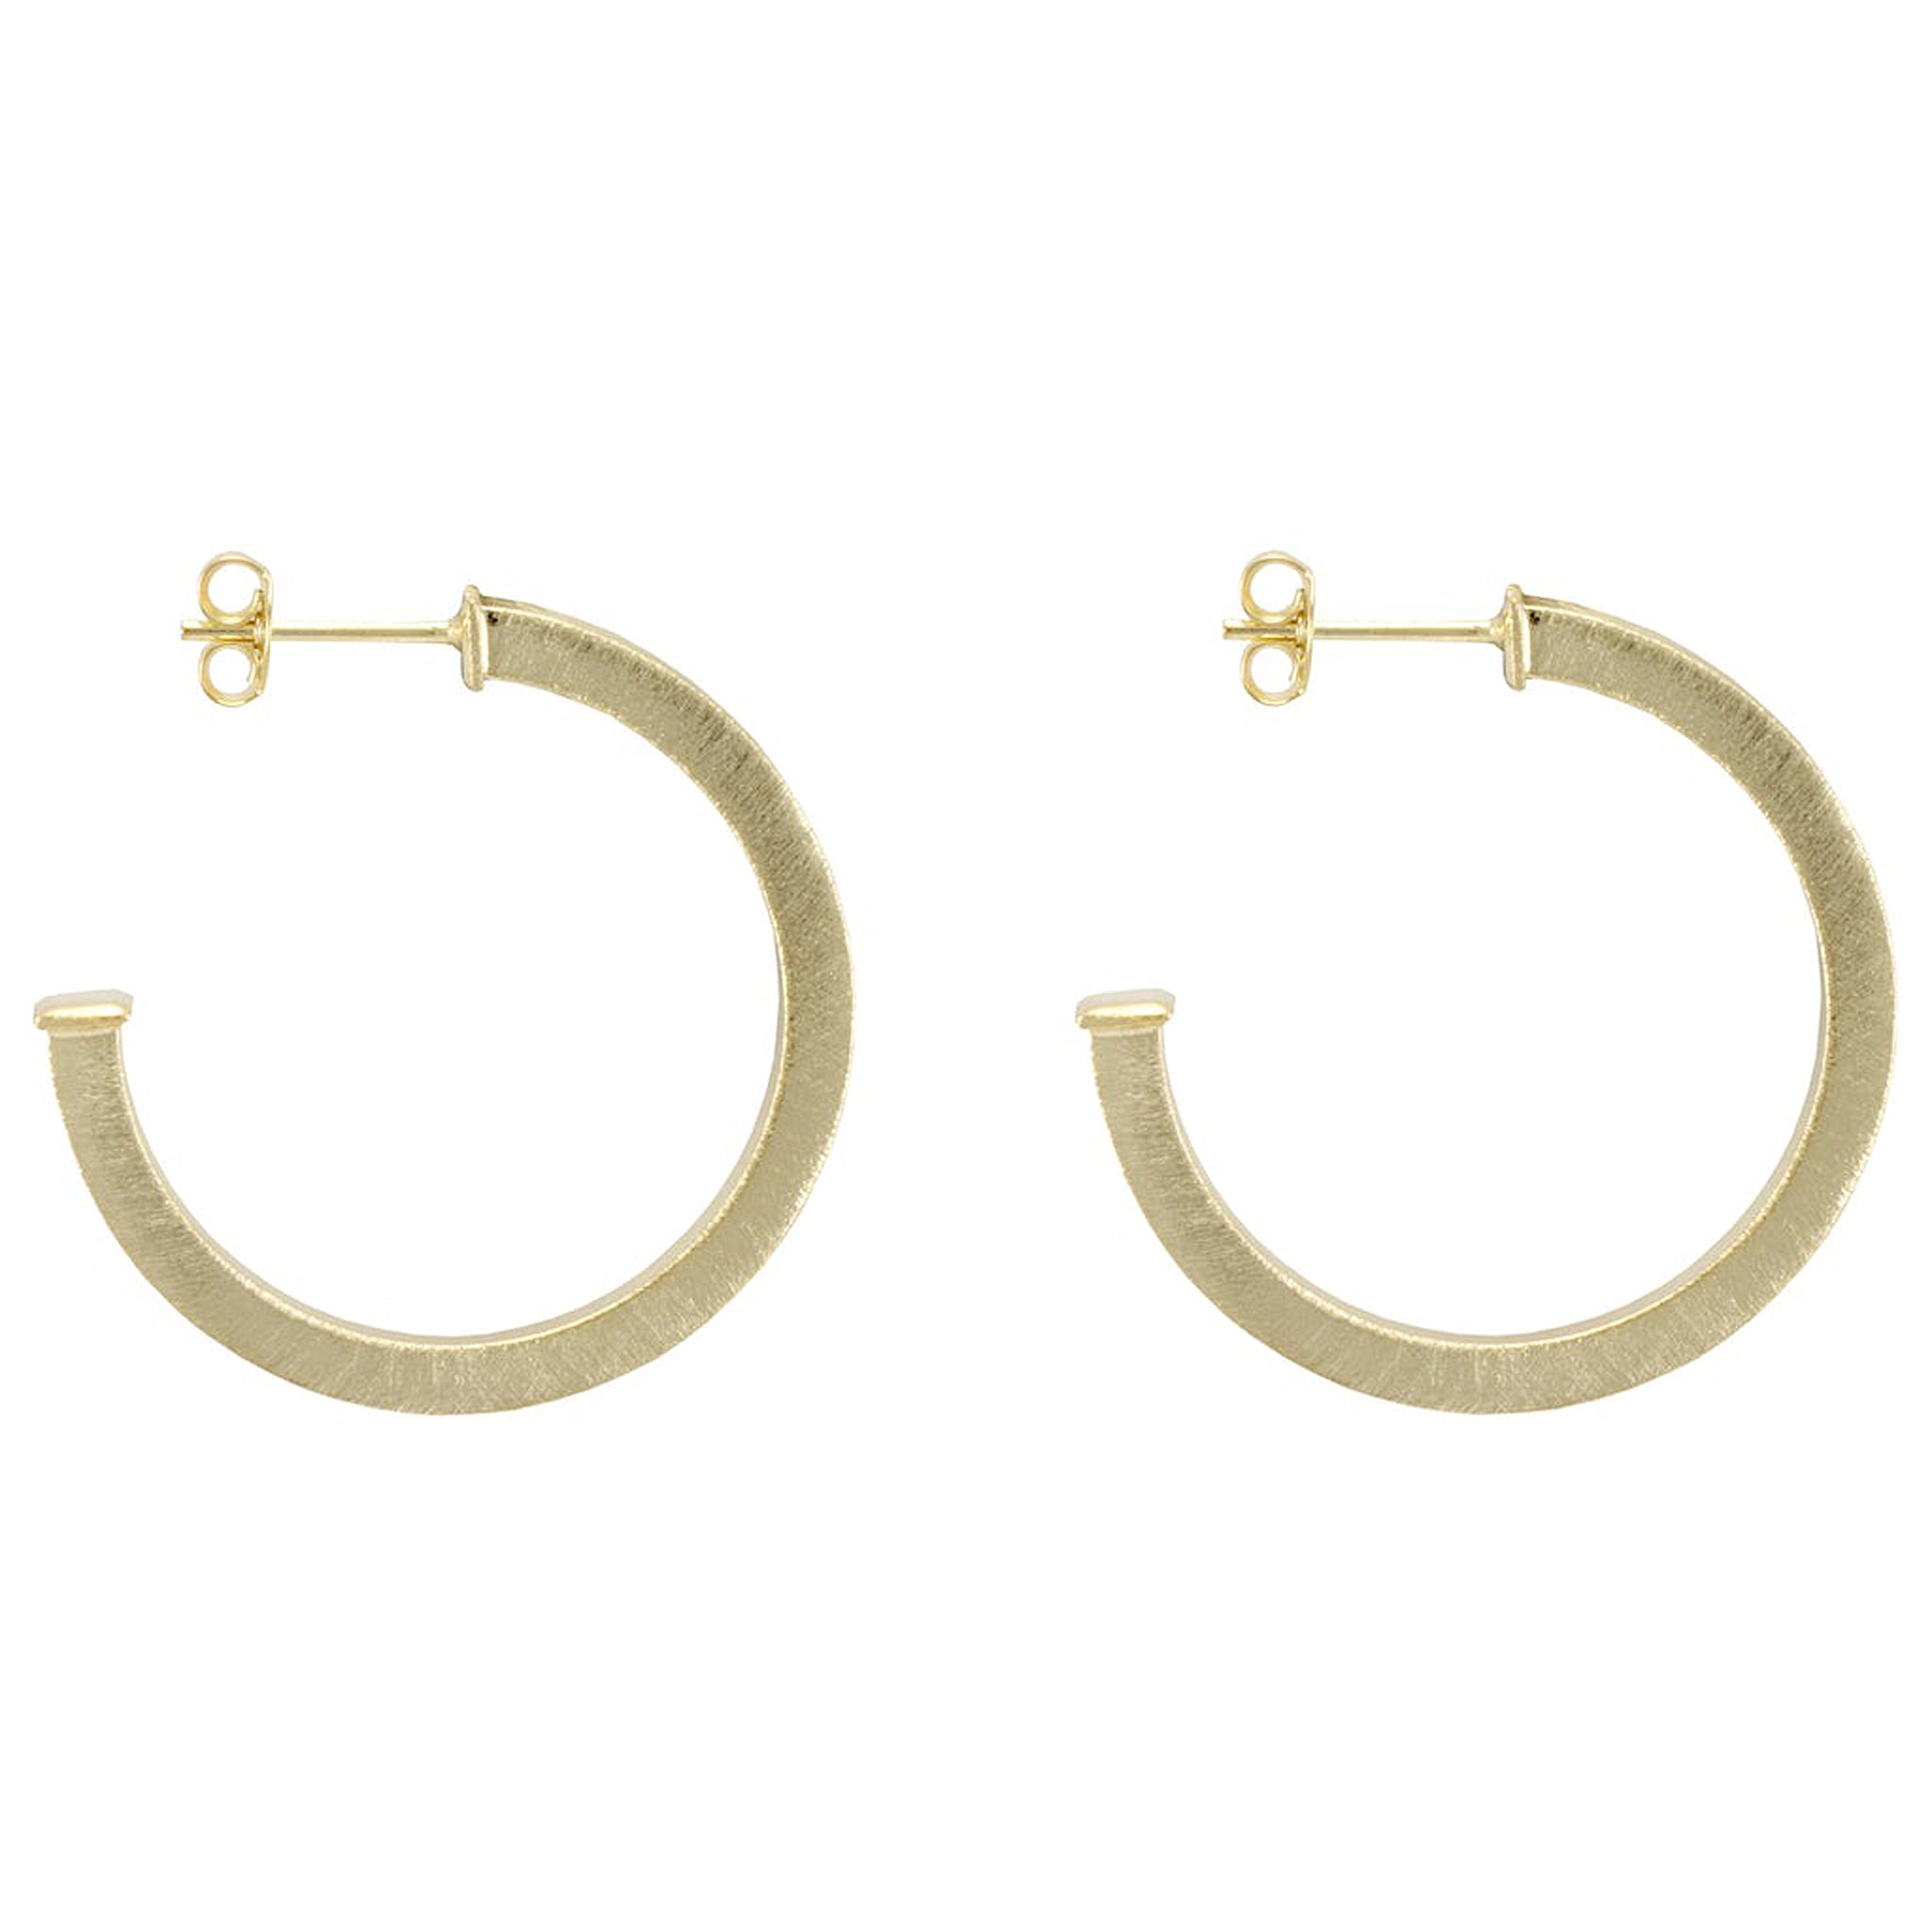 Sheila Fajl Elise Square Tube Hoop Earrings in 18k Brushed Gold Plated